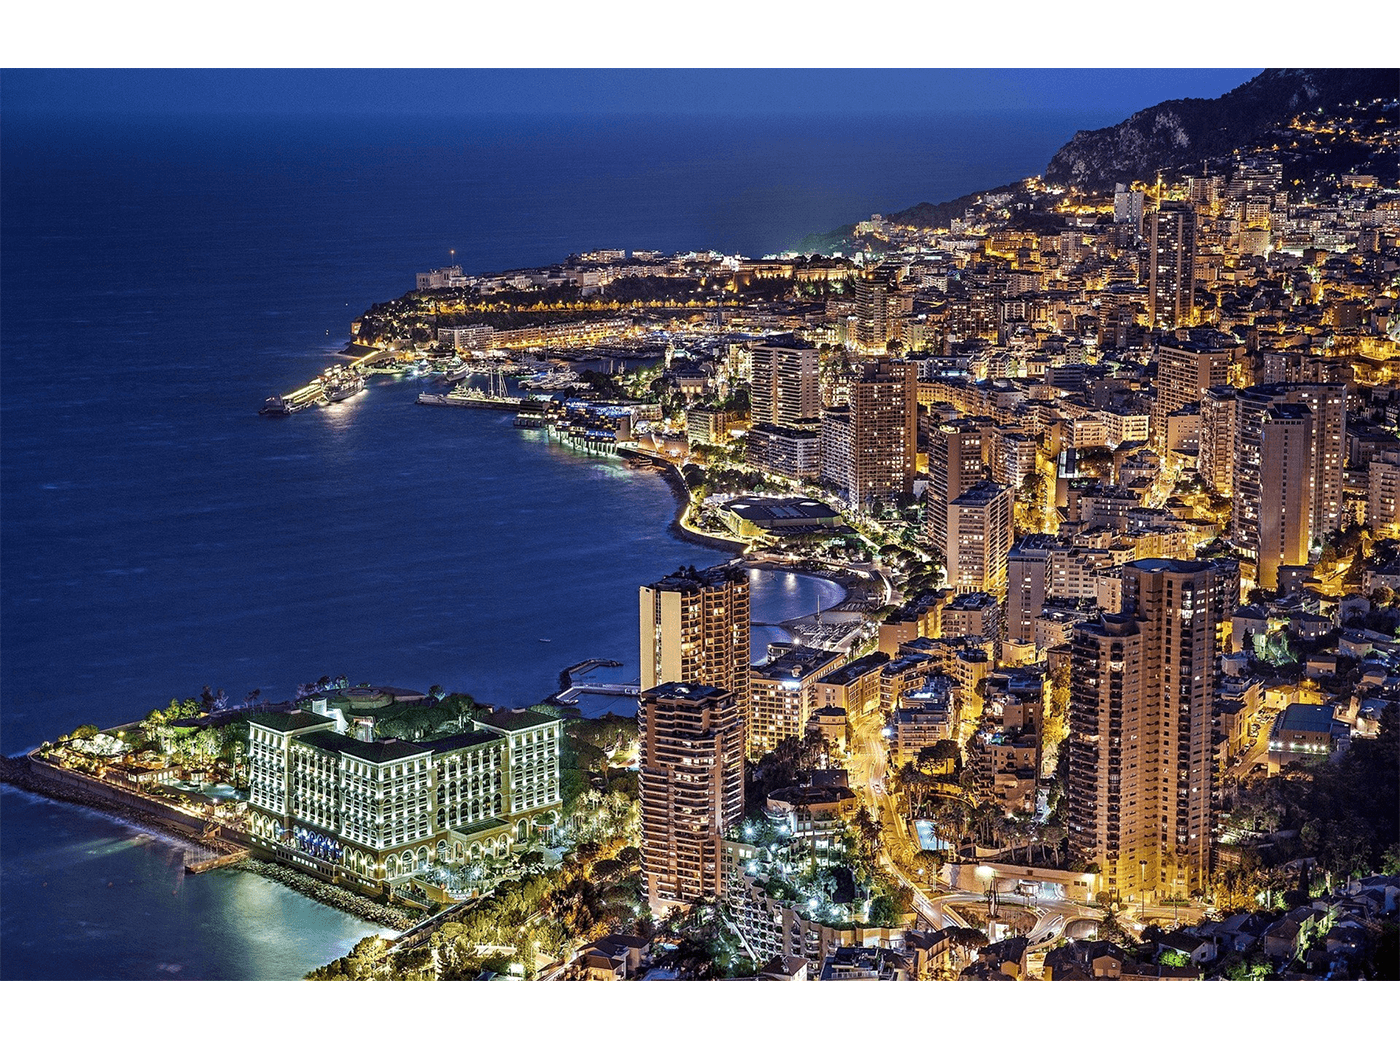 Monaco at night F1